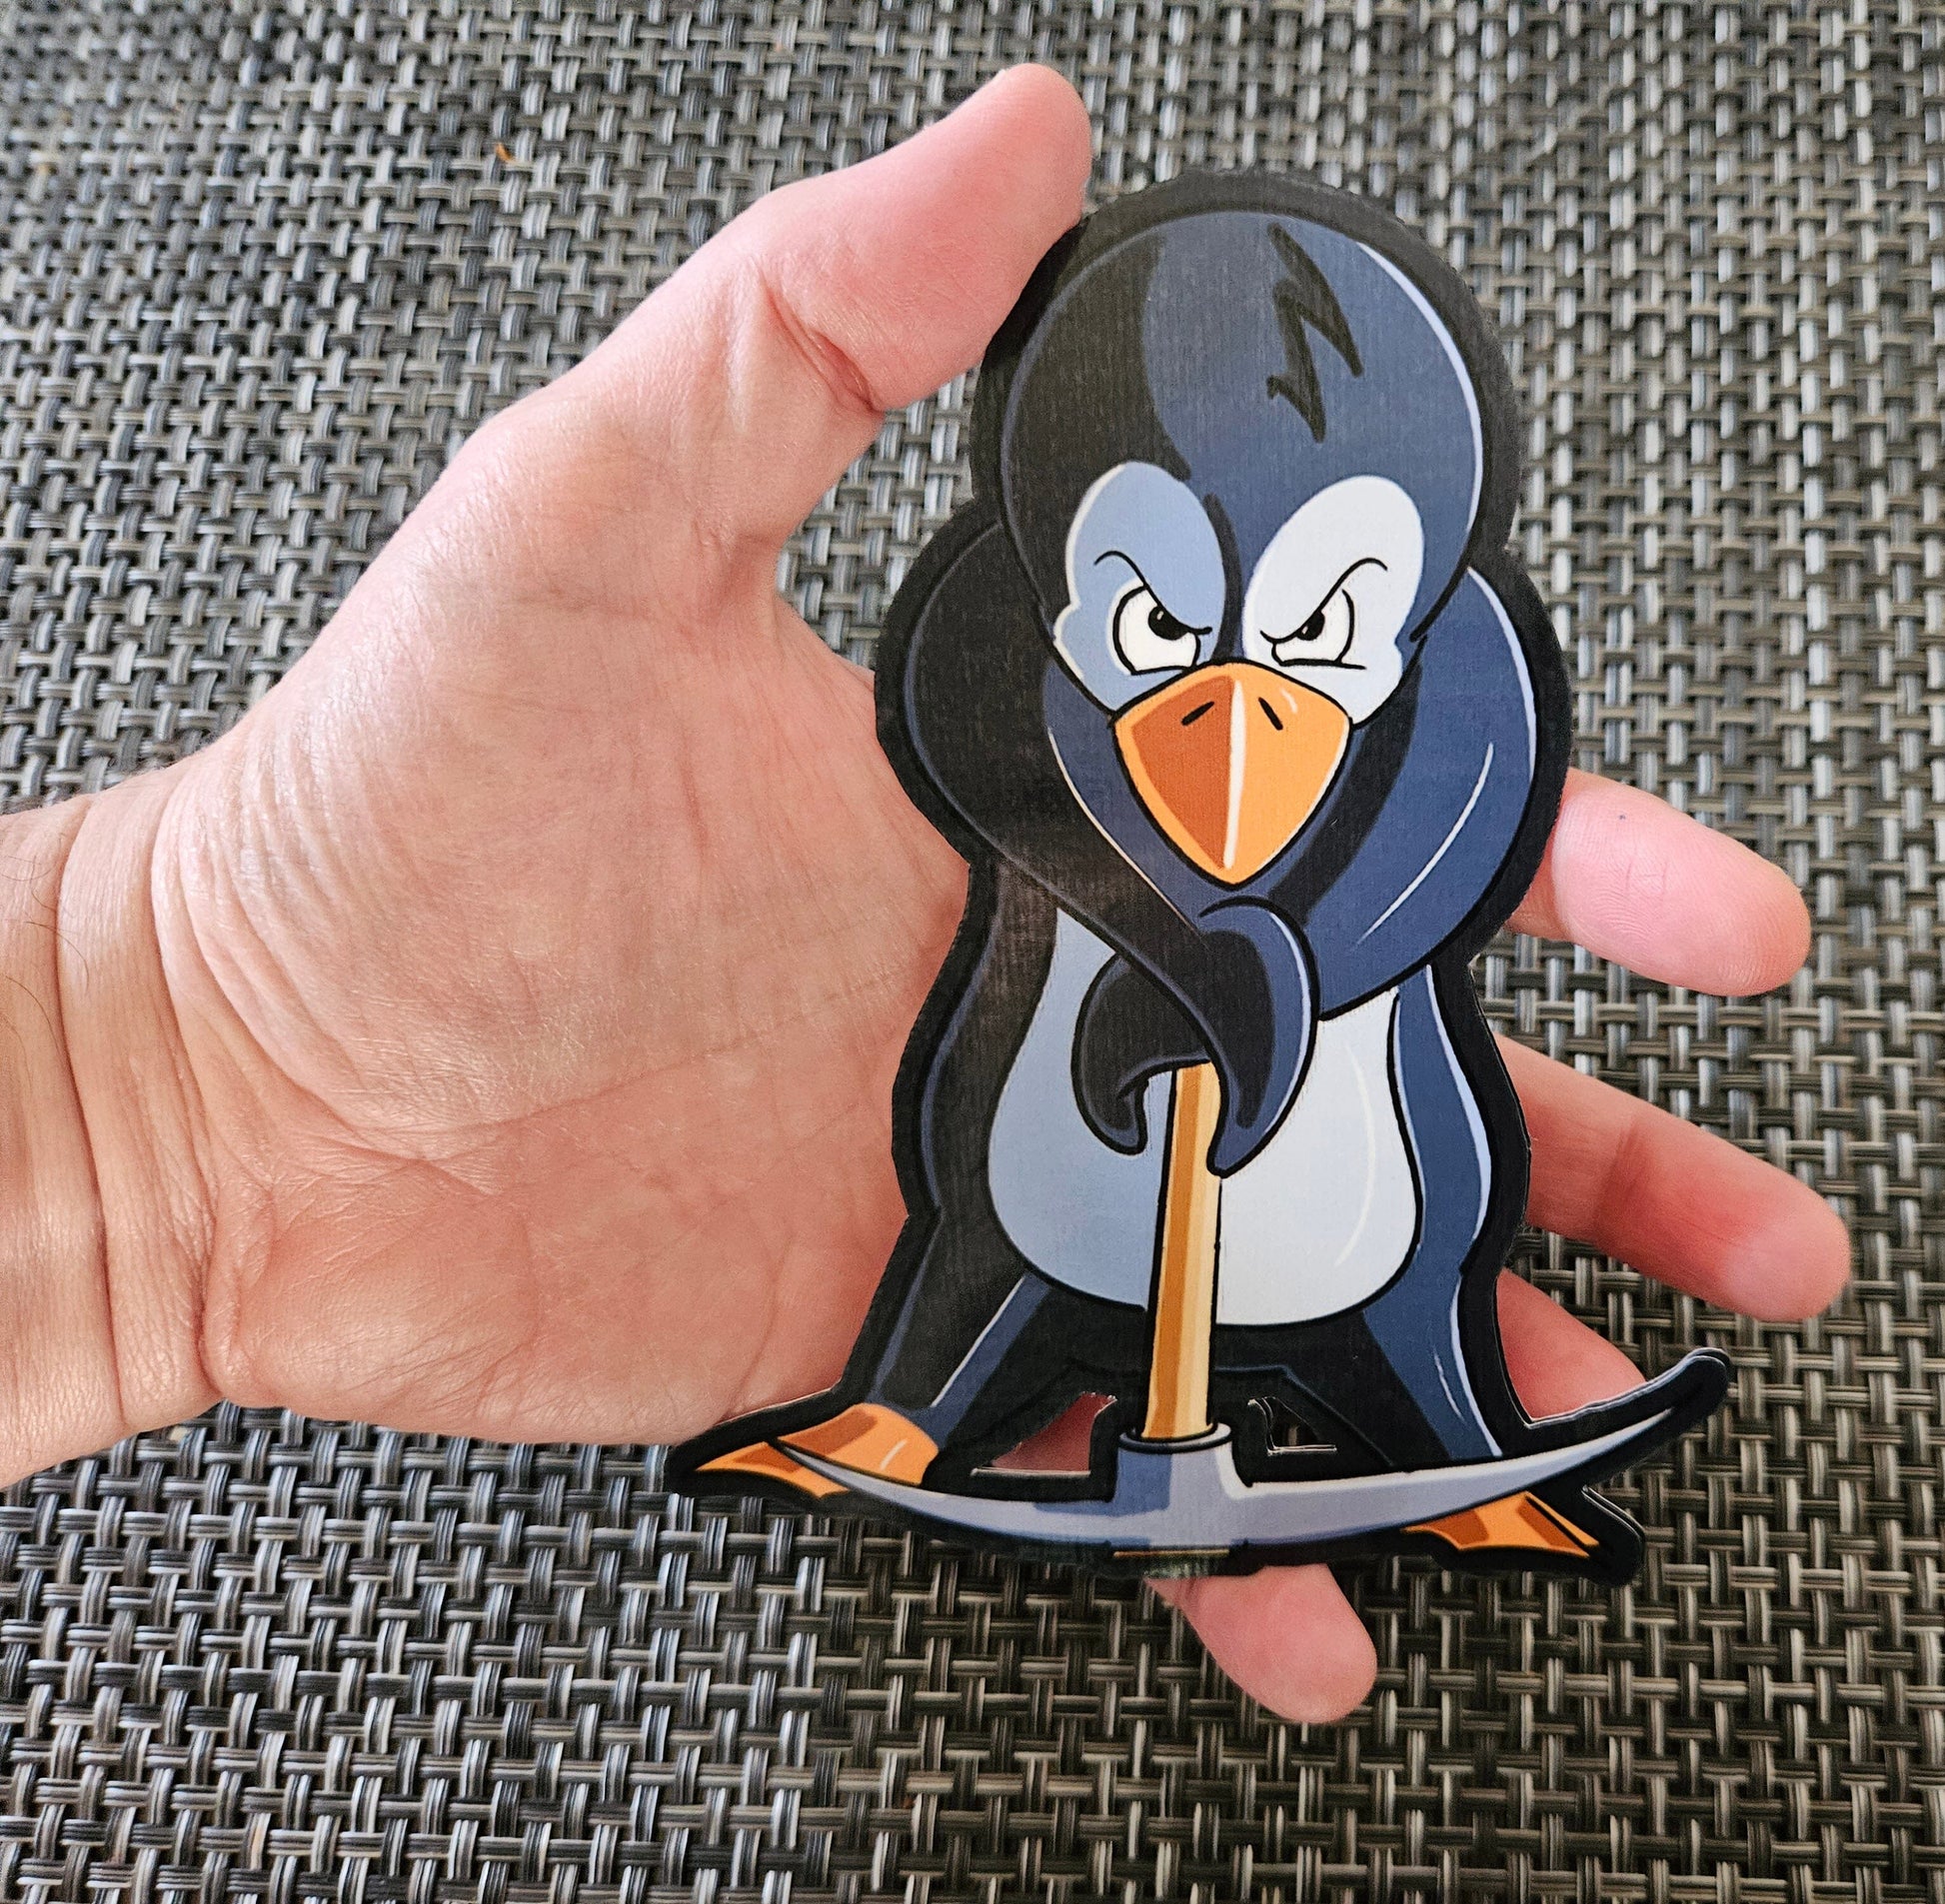 JUMBO Penguin with a Pick Axe sticker sticker DangerBearIndustries 